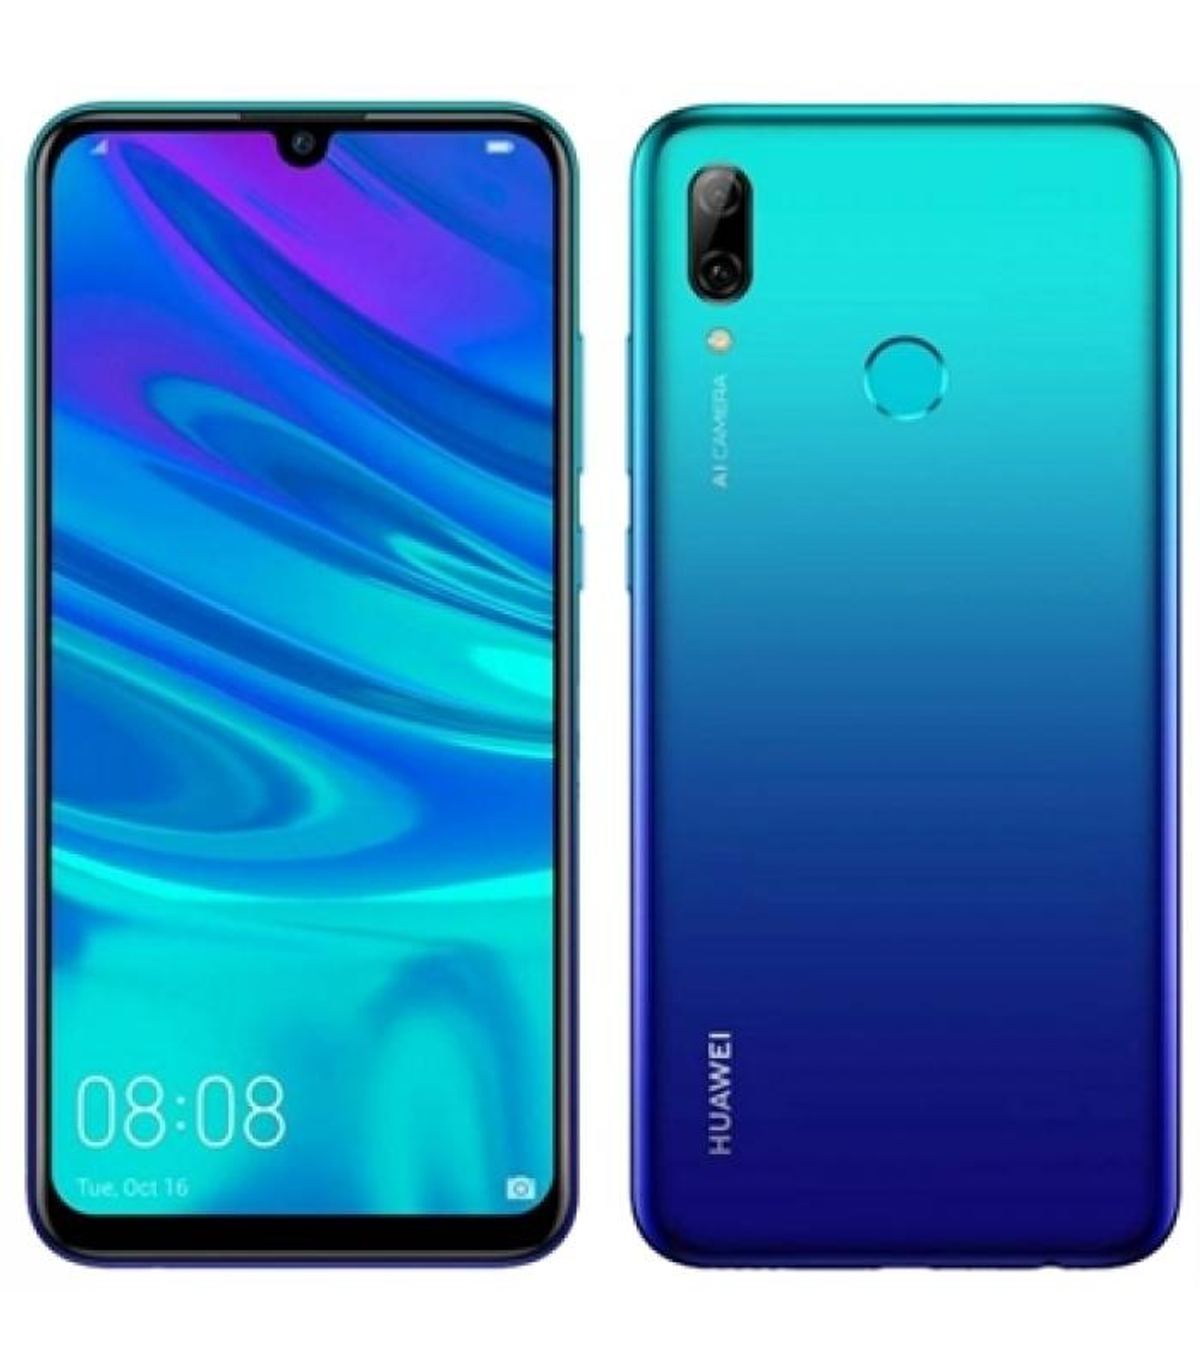 HUAWEI P (2019) Blue Dual SMART SIM 64 Aurora GB BLUE AURORA